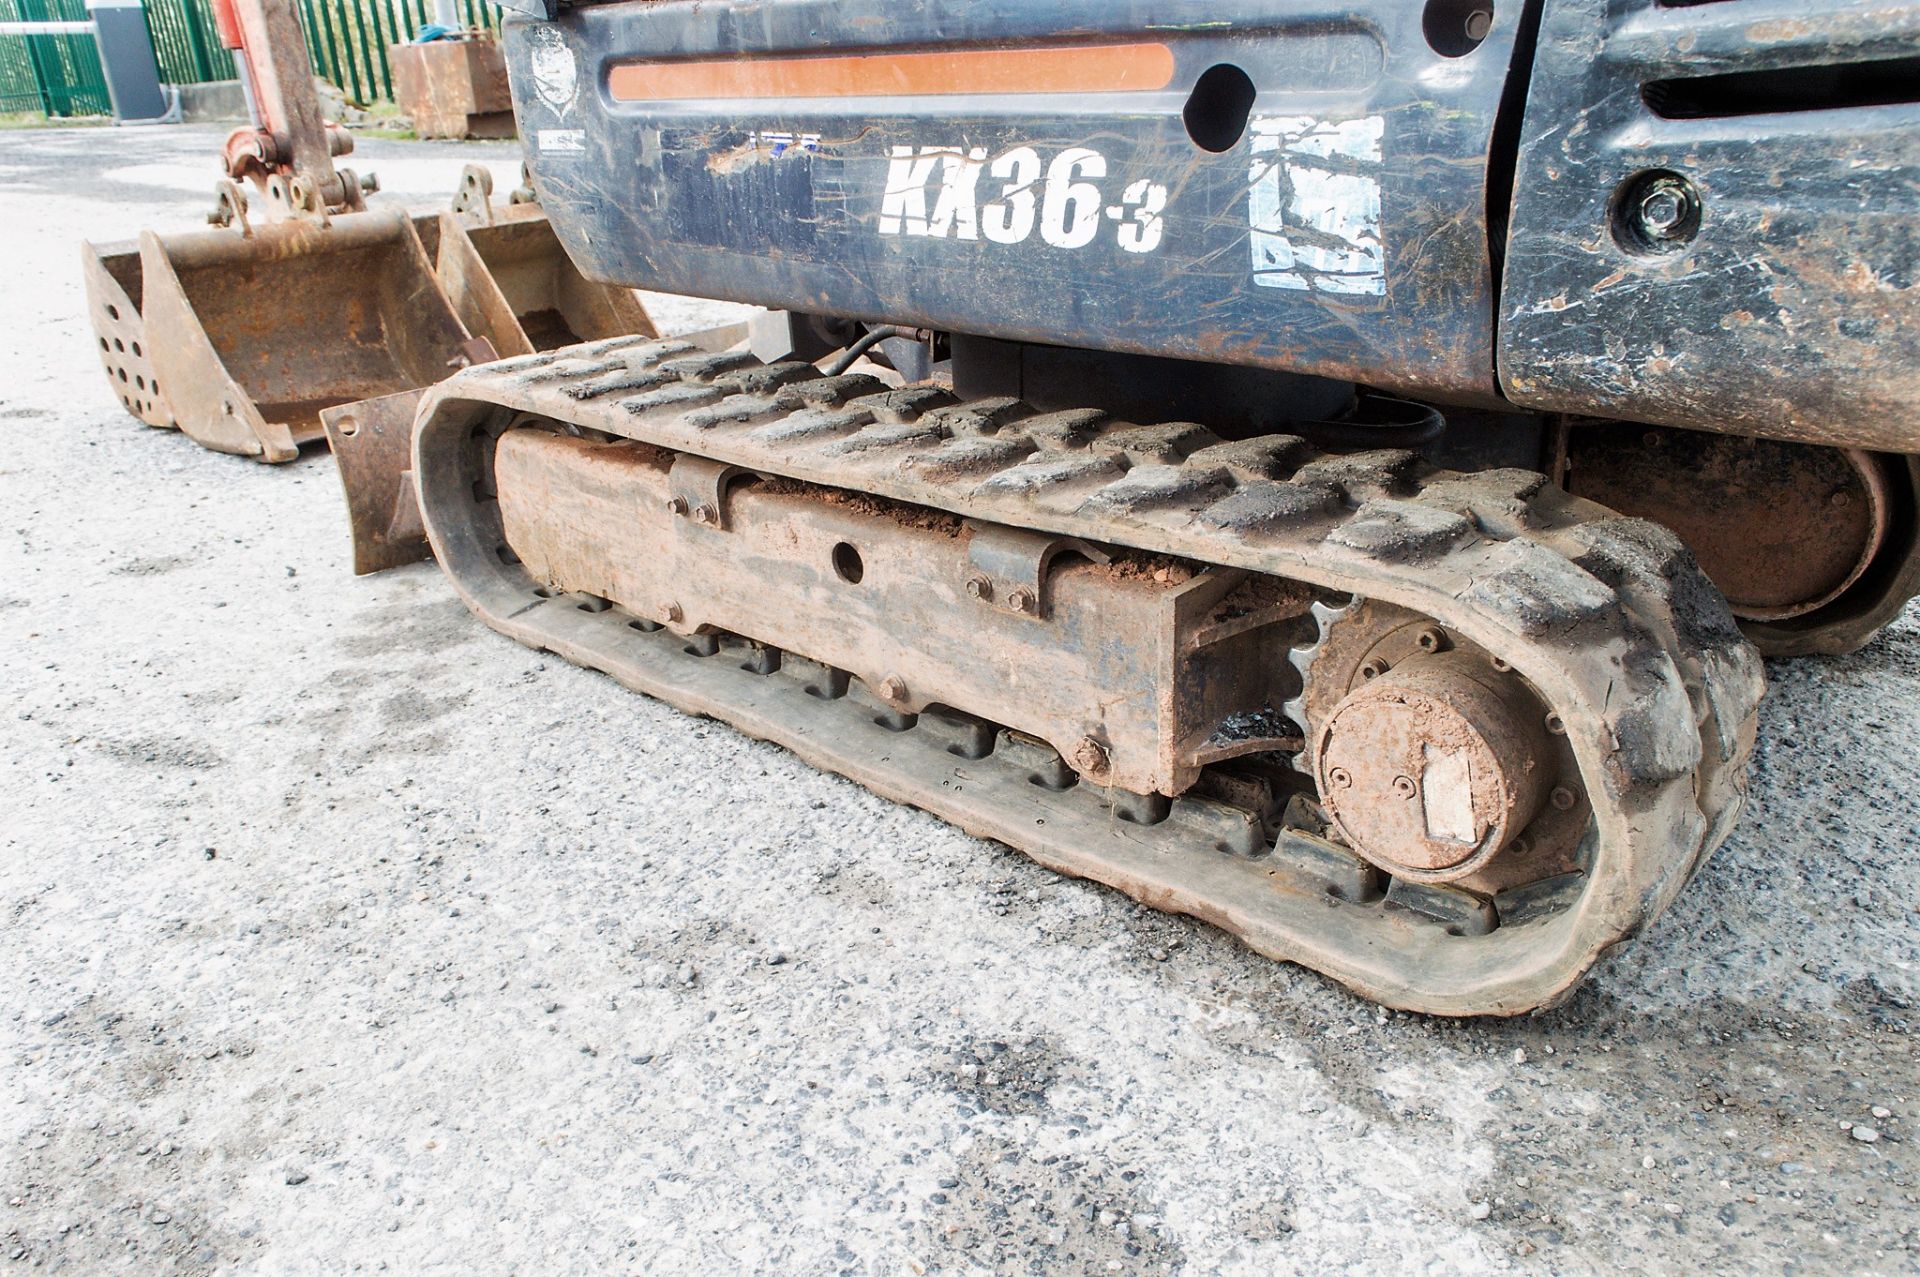 Kubota KX36-3 1.5 tonne rubber tracked mini excavator Year: 2004 S/N: 2Z055715 Recorded Hours: - Image 10 of 21